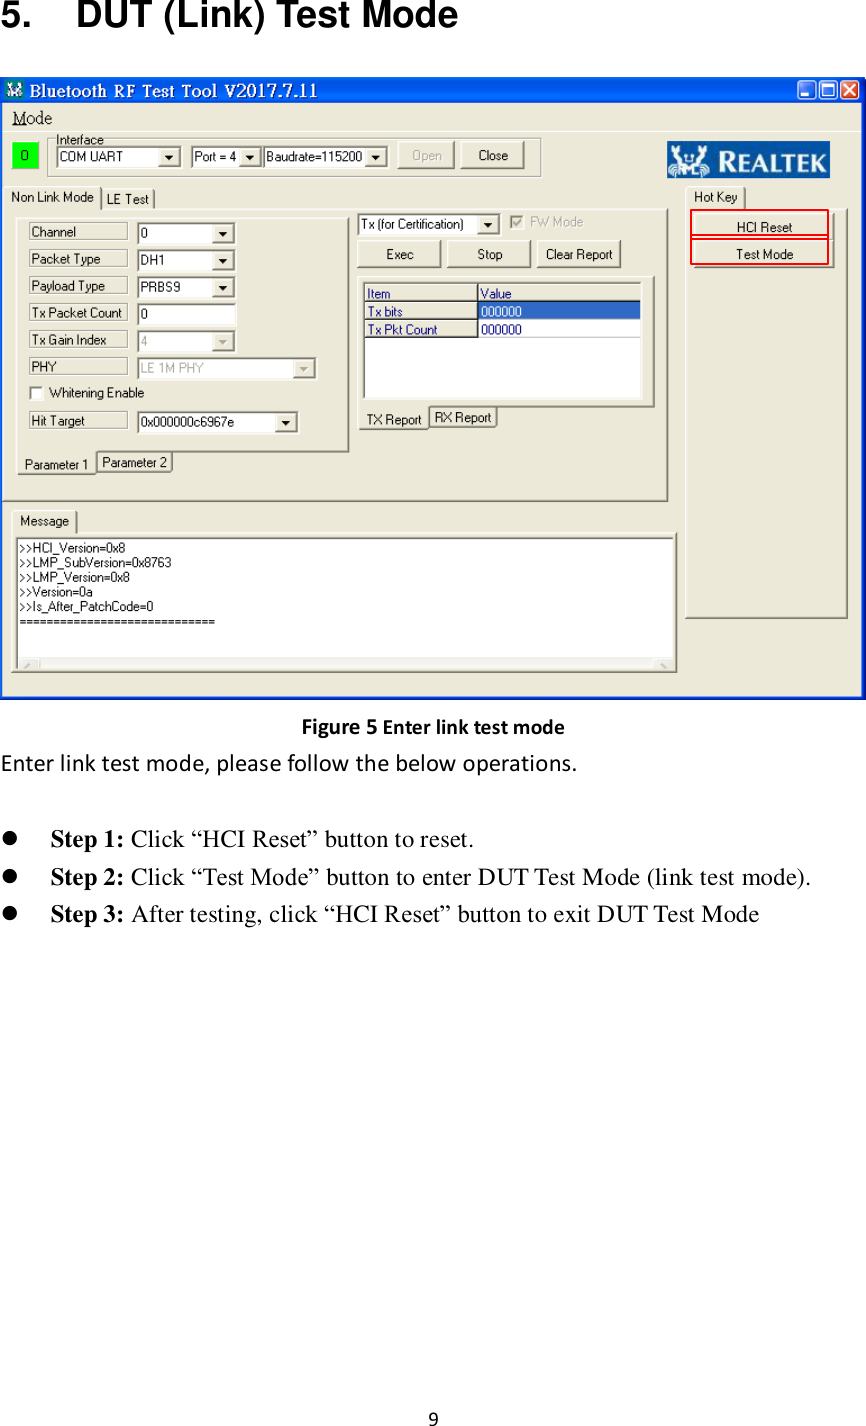 9  5. DUT (Link) Test Mode  Figure 5 Enter link test mode Enter link test mode, please follow the below operations.     Step 1: Click “HCI Reset” button to reset.  Step 2: Click “Test Mode” button to enter DUT Test Mode (link test mode).  Step 3: After testing, click “HCI Reset” button to exit DUT Test Mode 